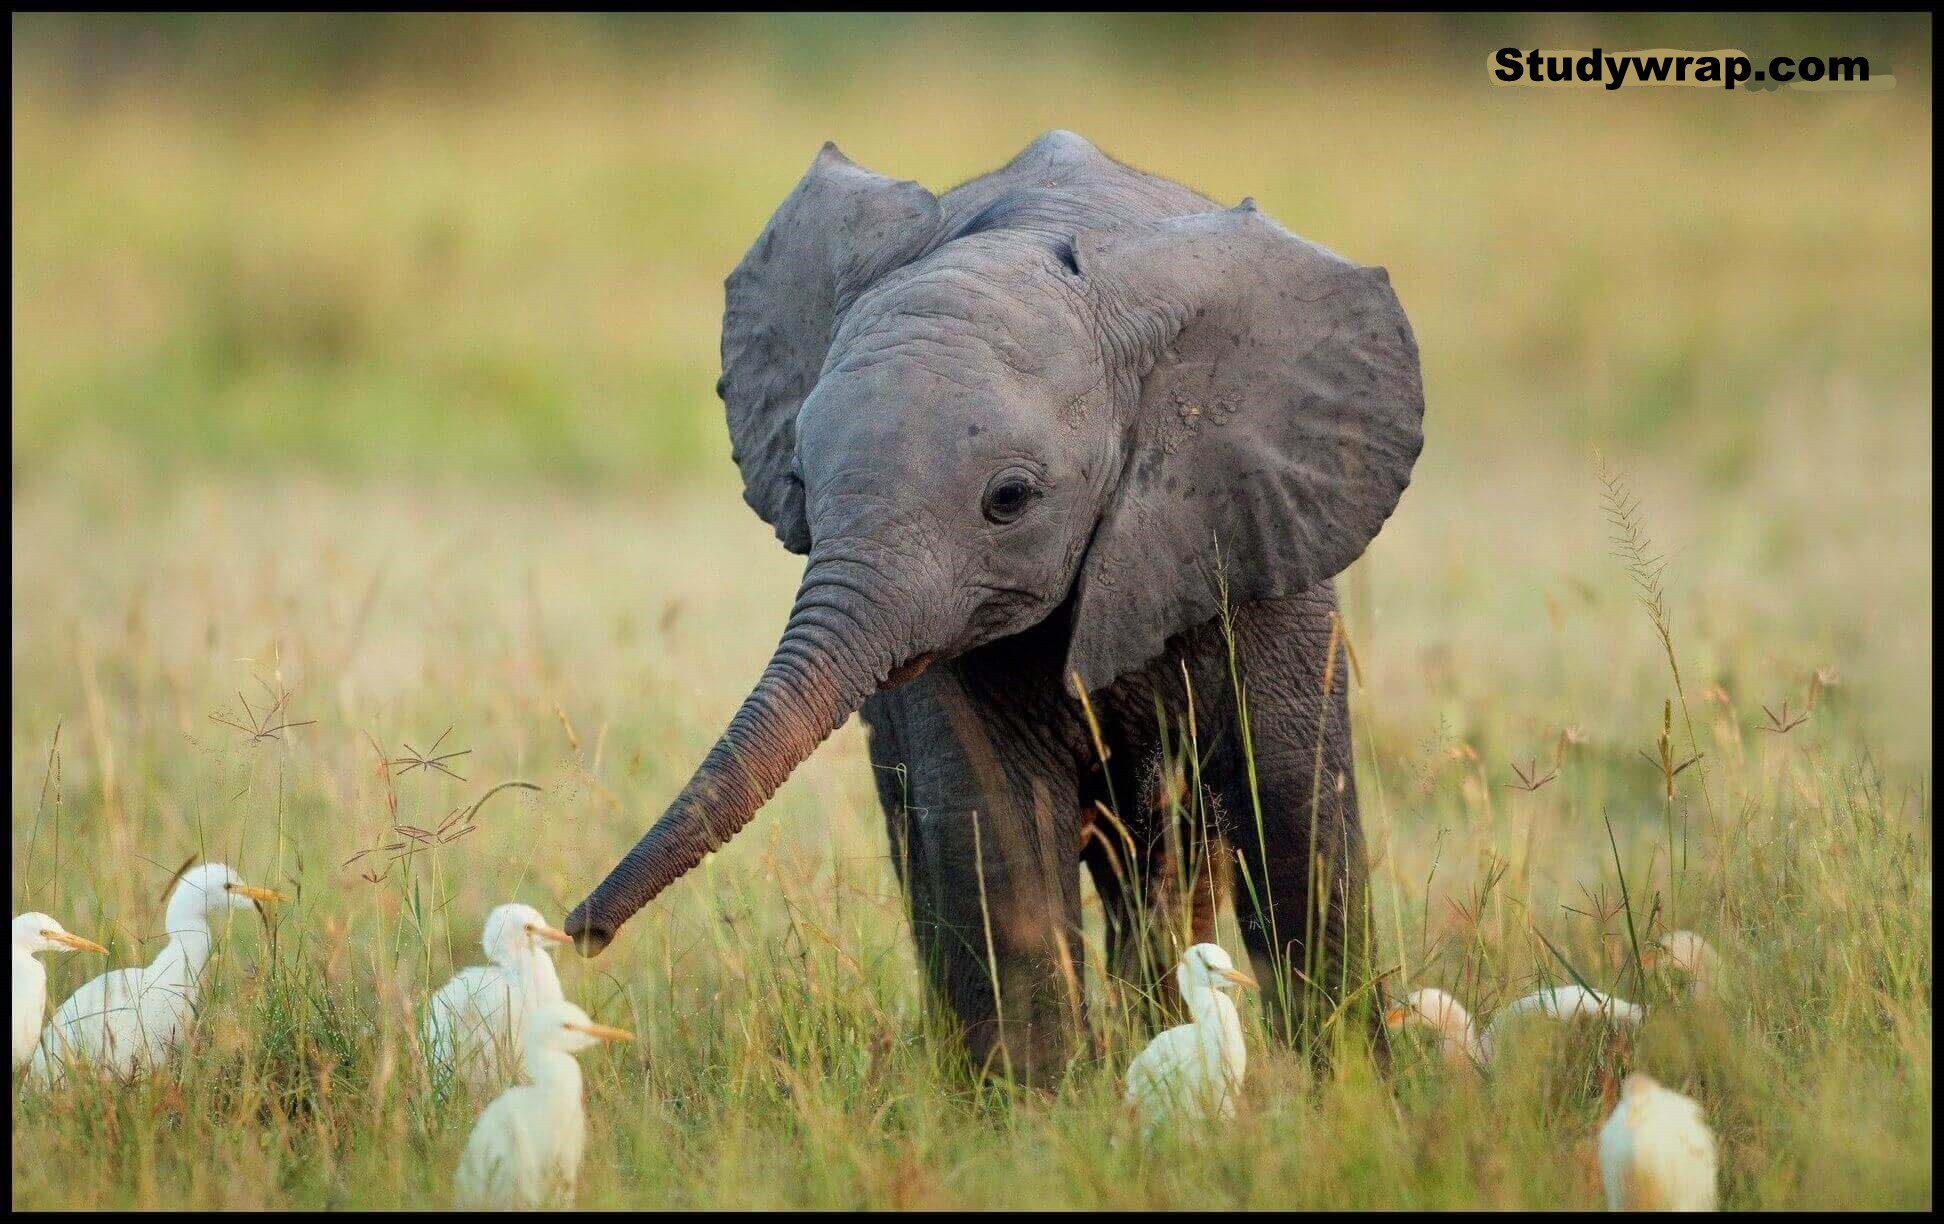 Project Elephant, Elephant conservation project, Elephant conservation schemes by Indian Government, Elephant reserves